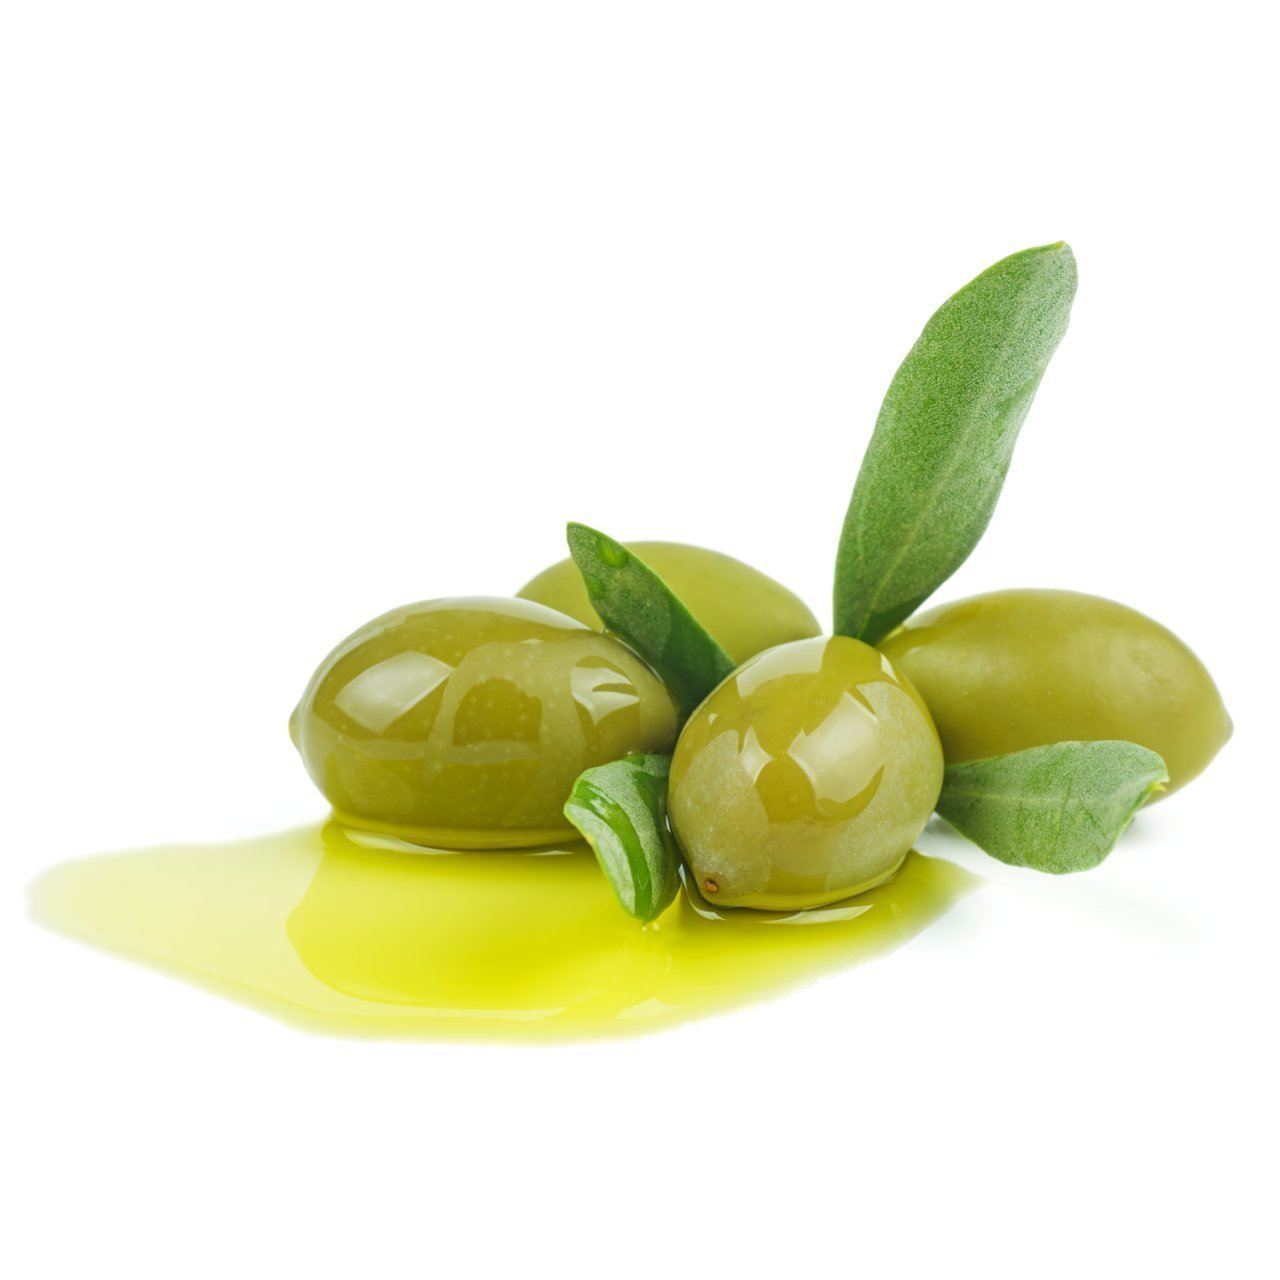 Green Scratched Olives - Scratched Green Olives - Scratched Olives - Green Olives